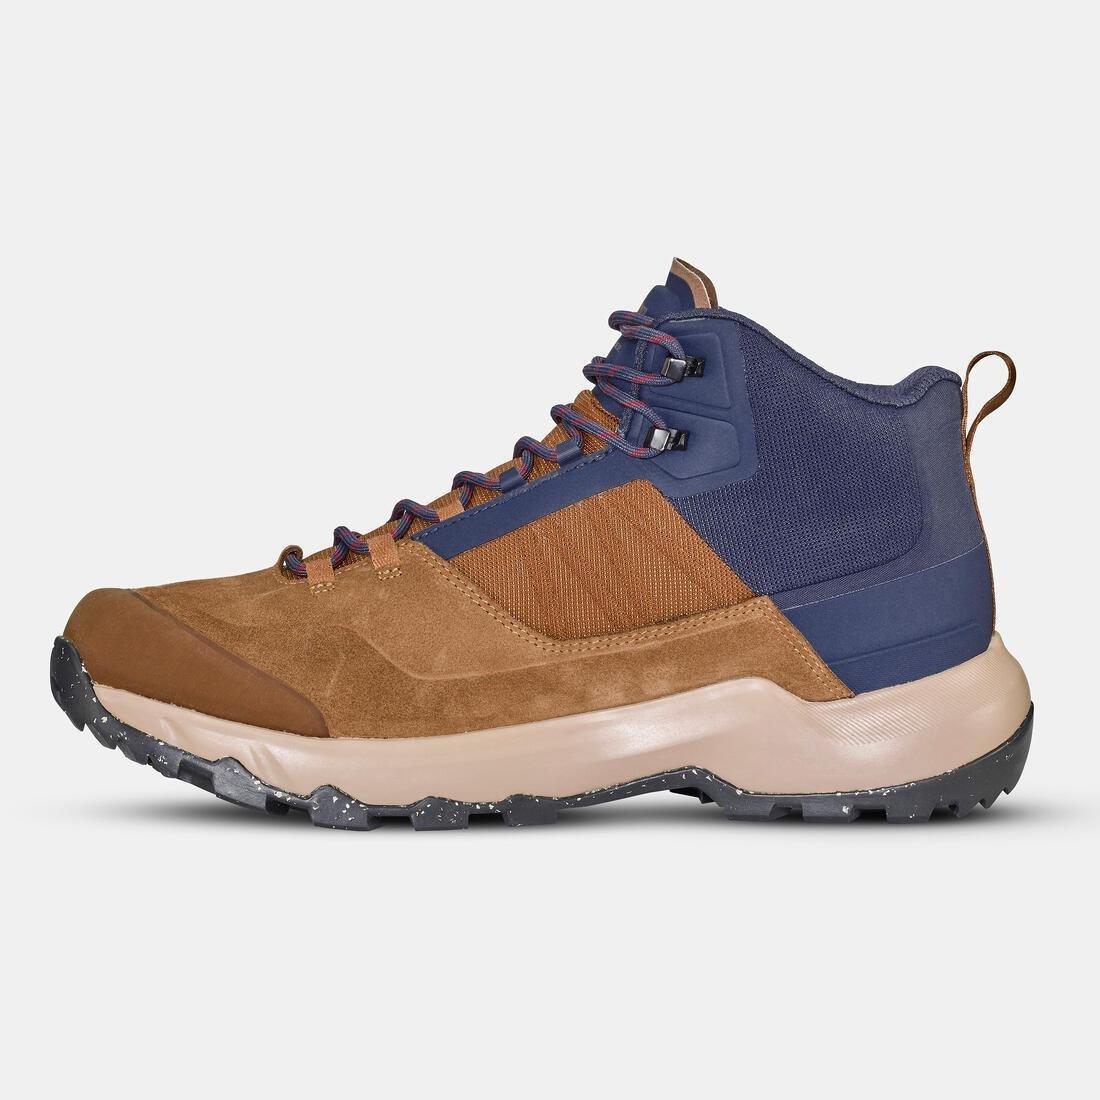 QUECHUA - Men Waterproof Mountain Walking Shoes - Mh500 Mid, Multicolour